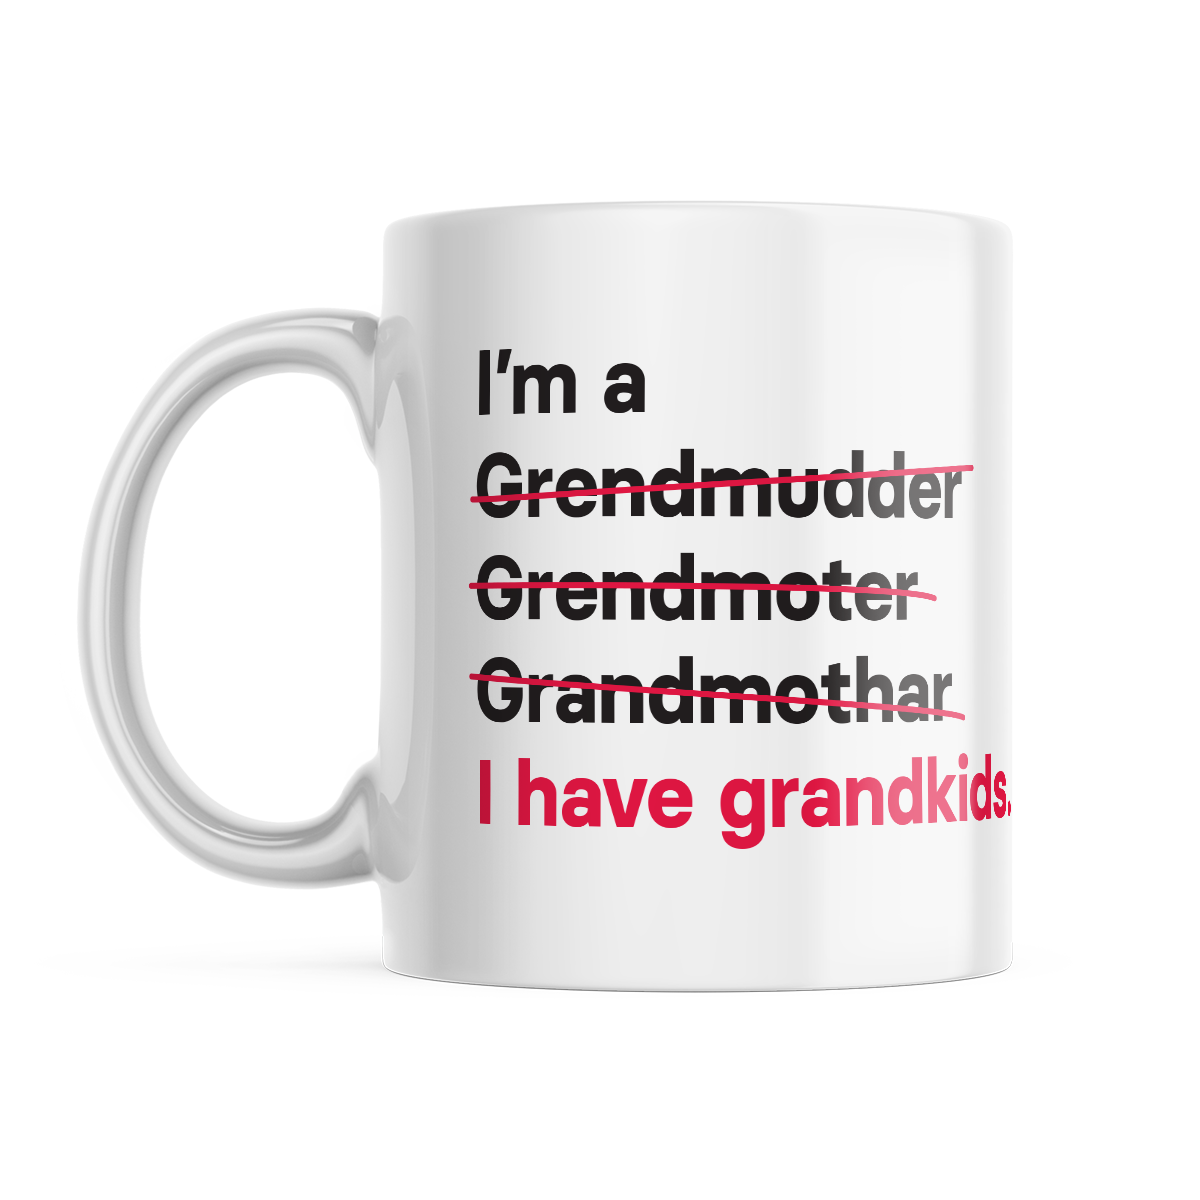 I'm a Grandmother